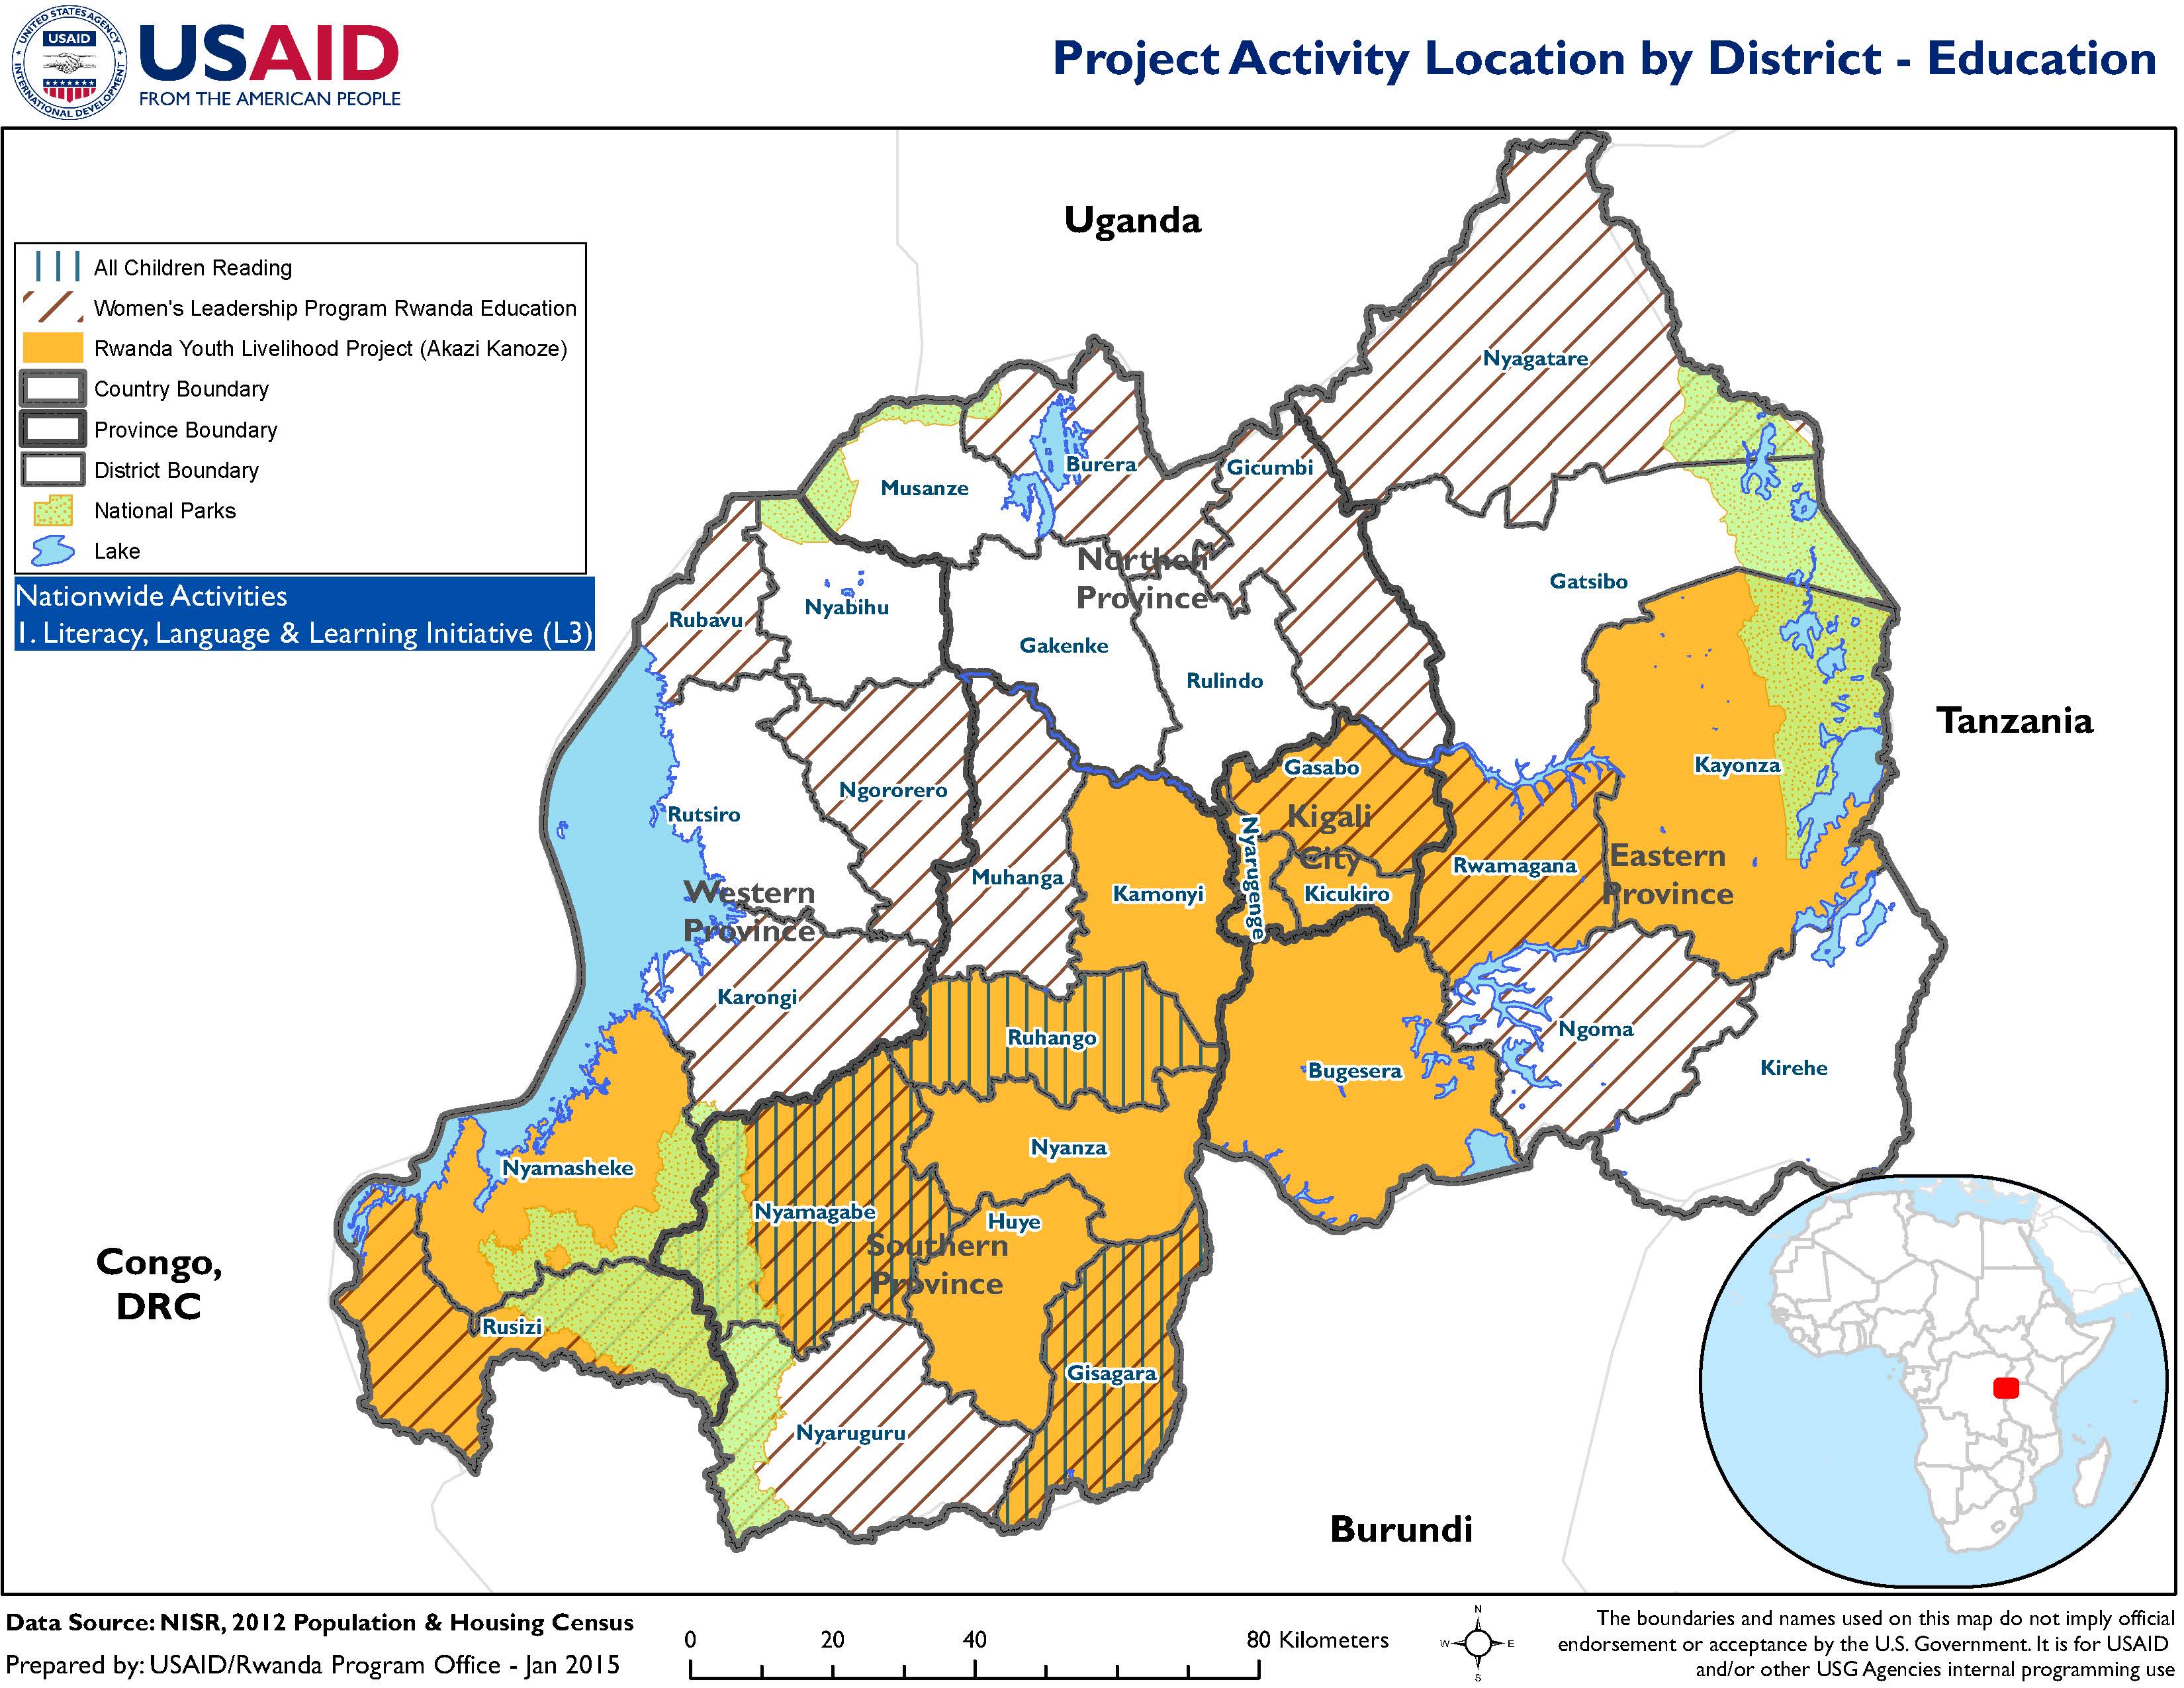 FY 2014 USAID/Rwanda's Education Program Locations by District